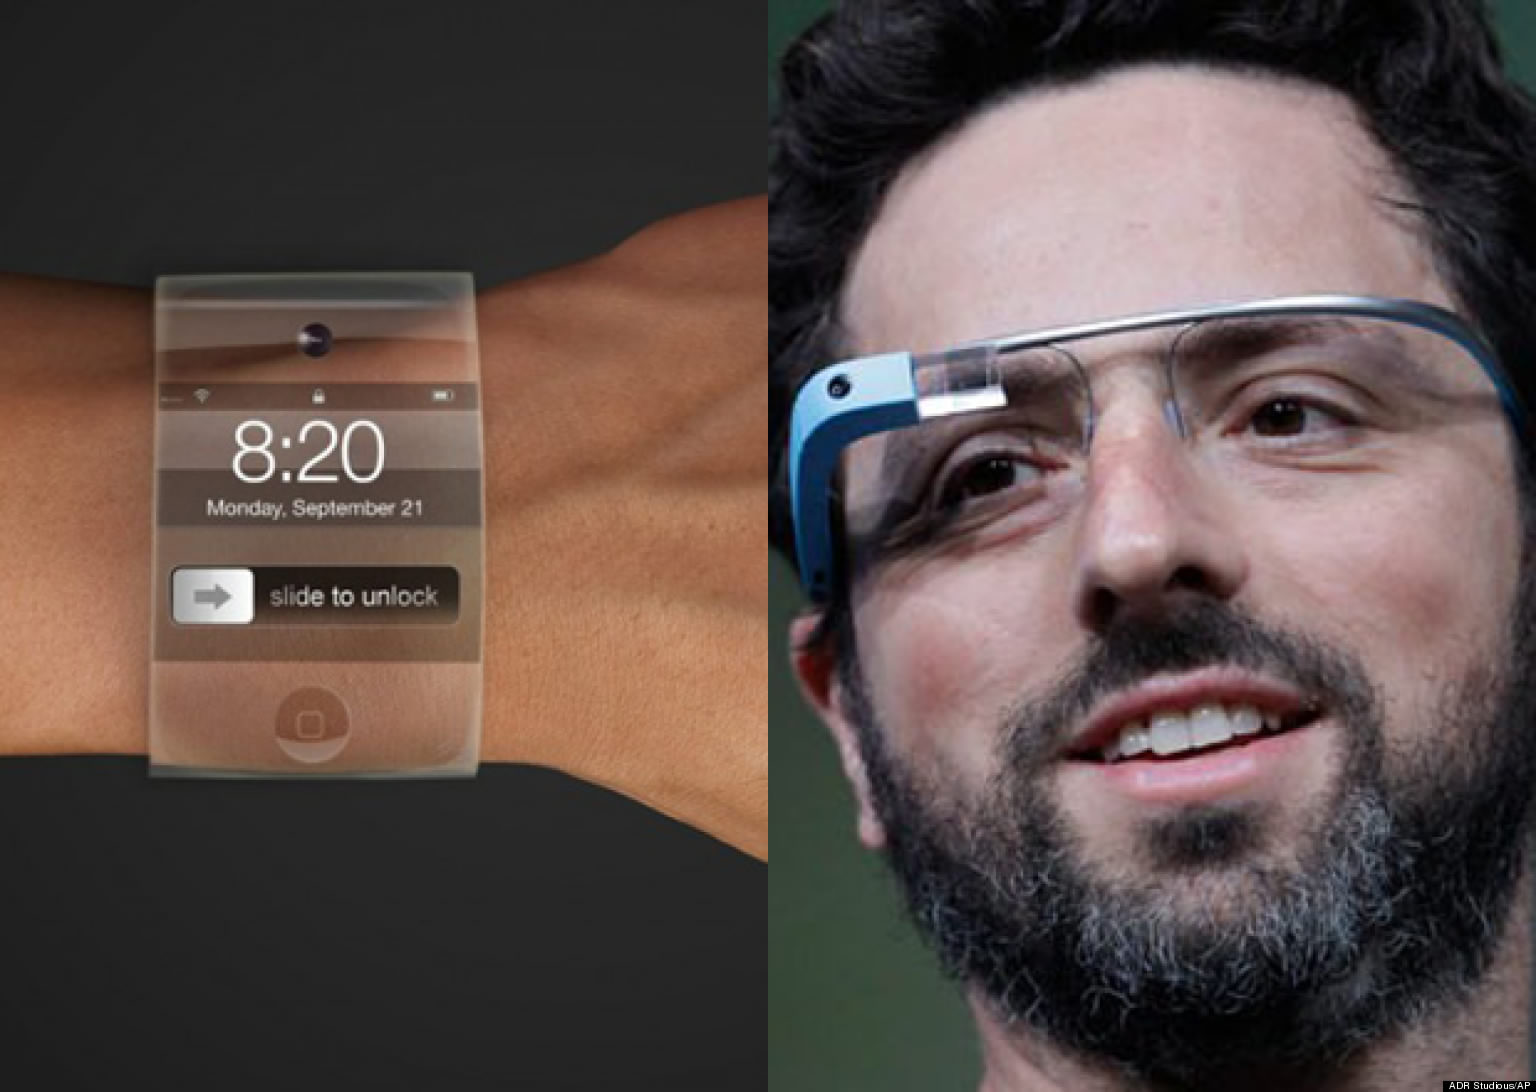 Google Glass Price